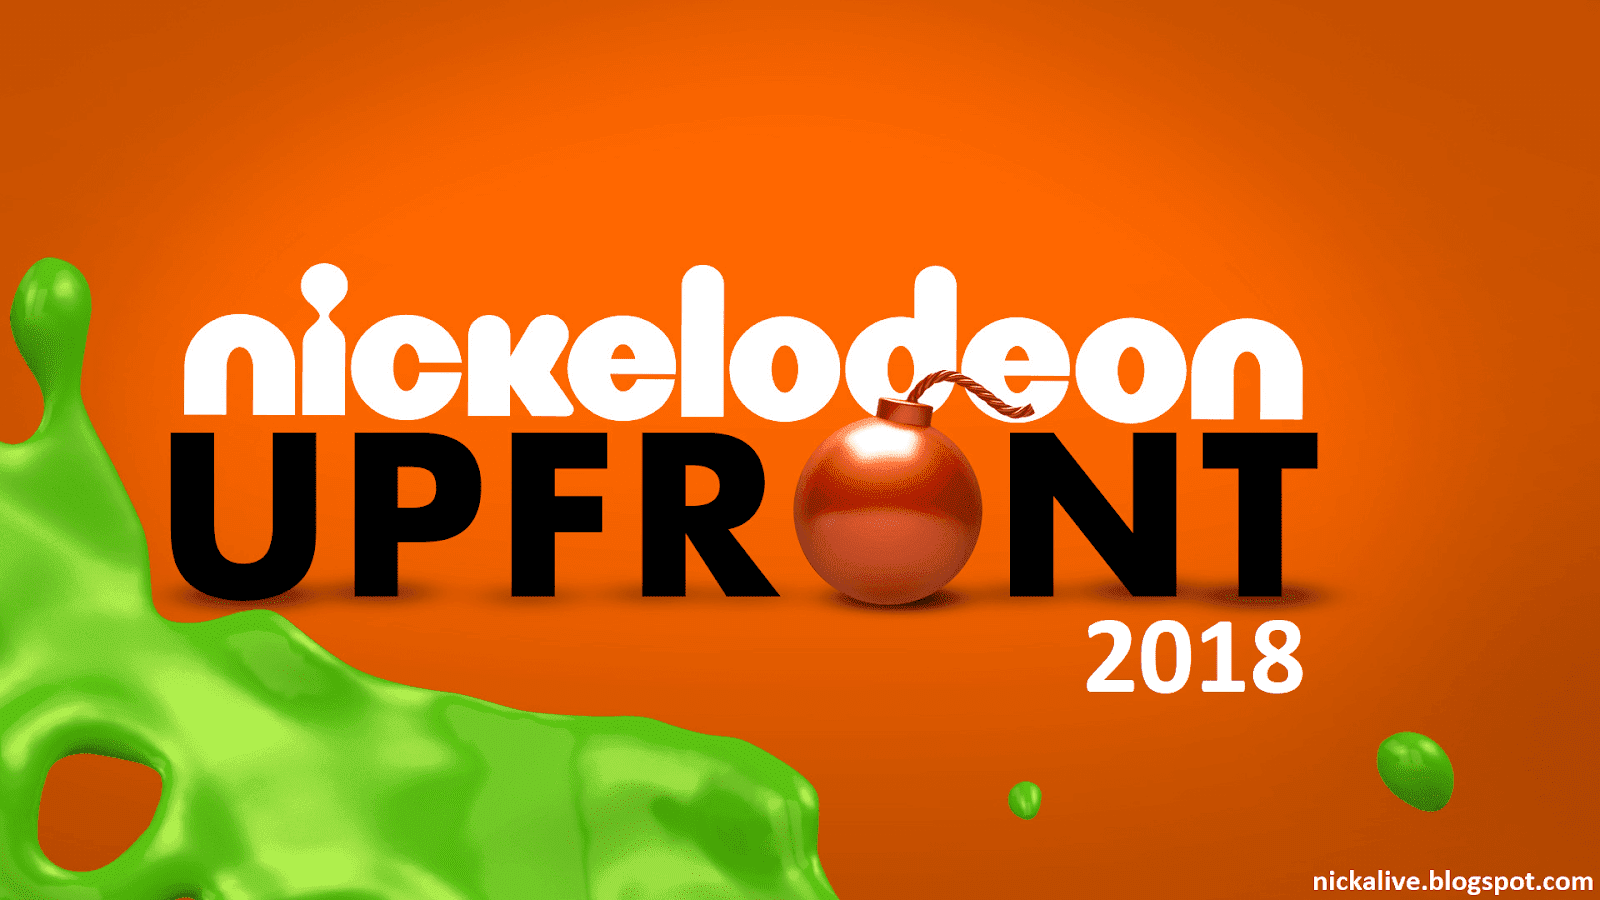 NickALive!: Nickelodeon Upfront 2018